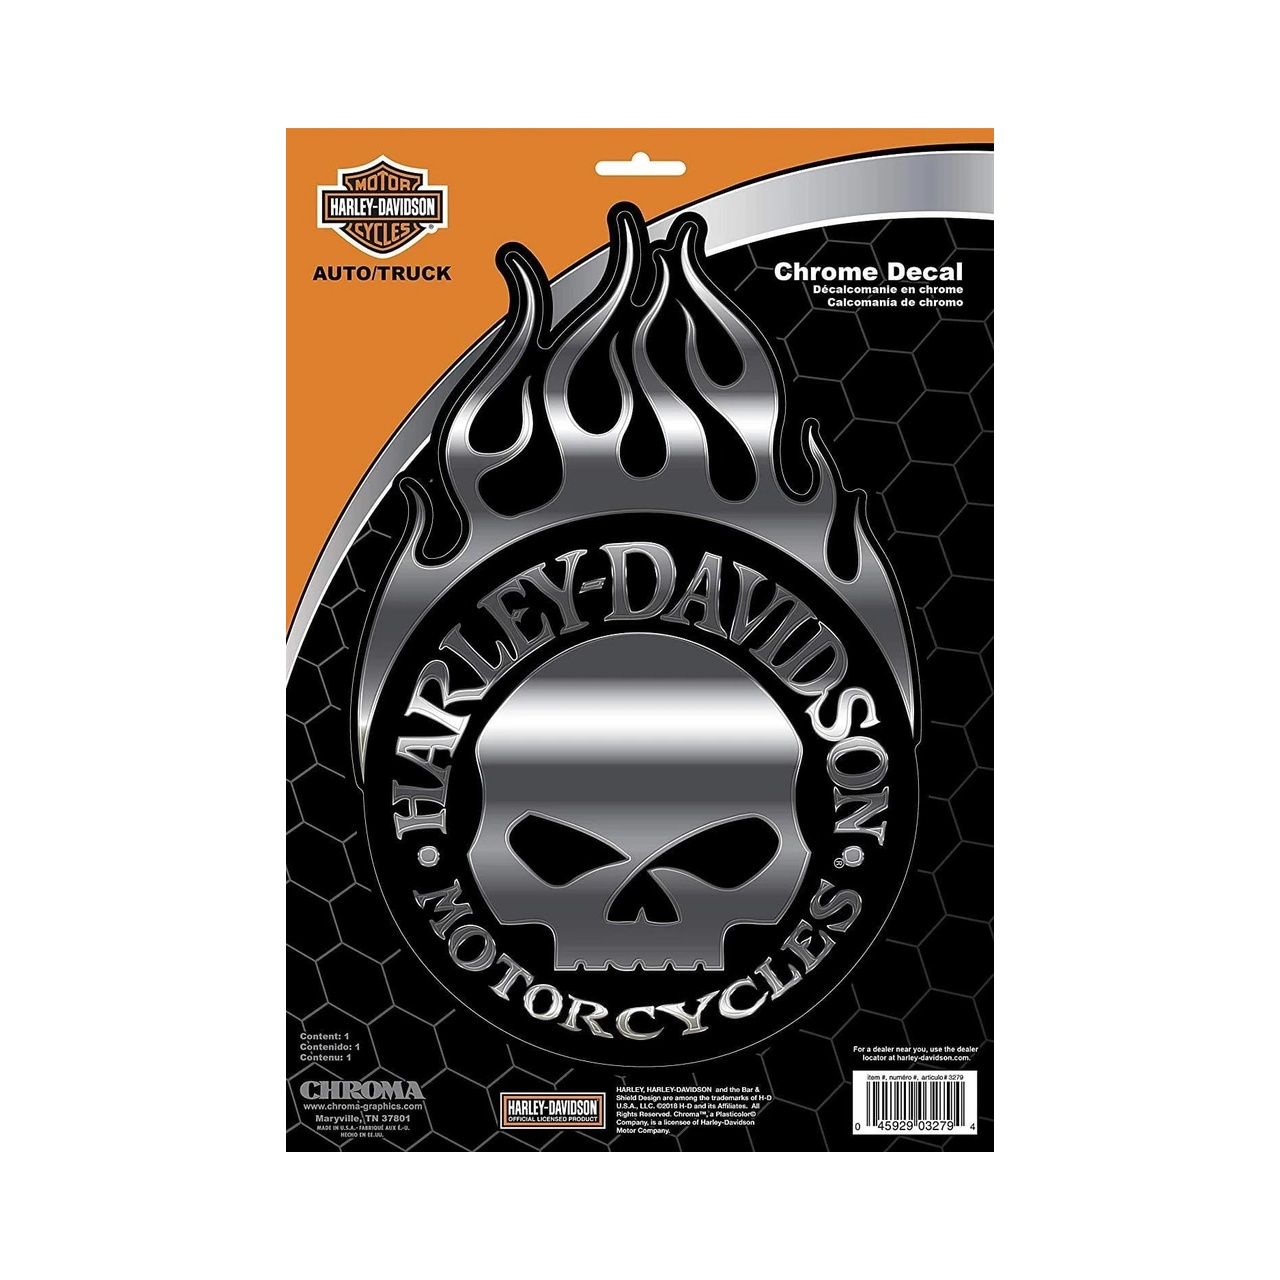 Harley Davidson Motor Company Aufkleber Bike Tuning Sticker 2 Stück  Motorrad Emblem Logo Chopper - Bremssattel-Aufkleber